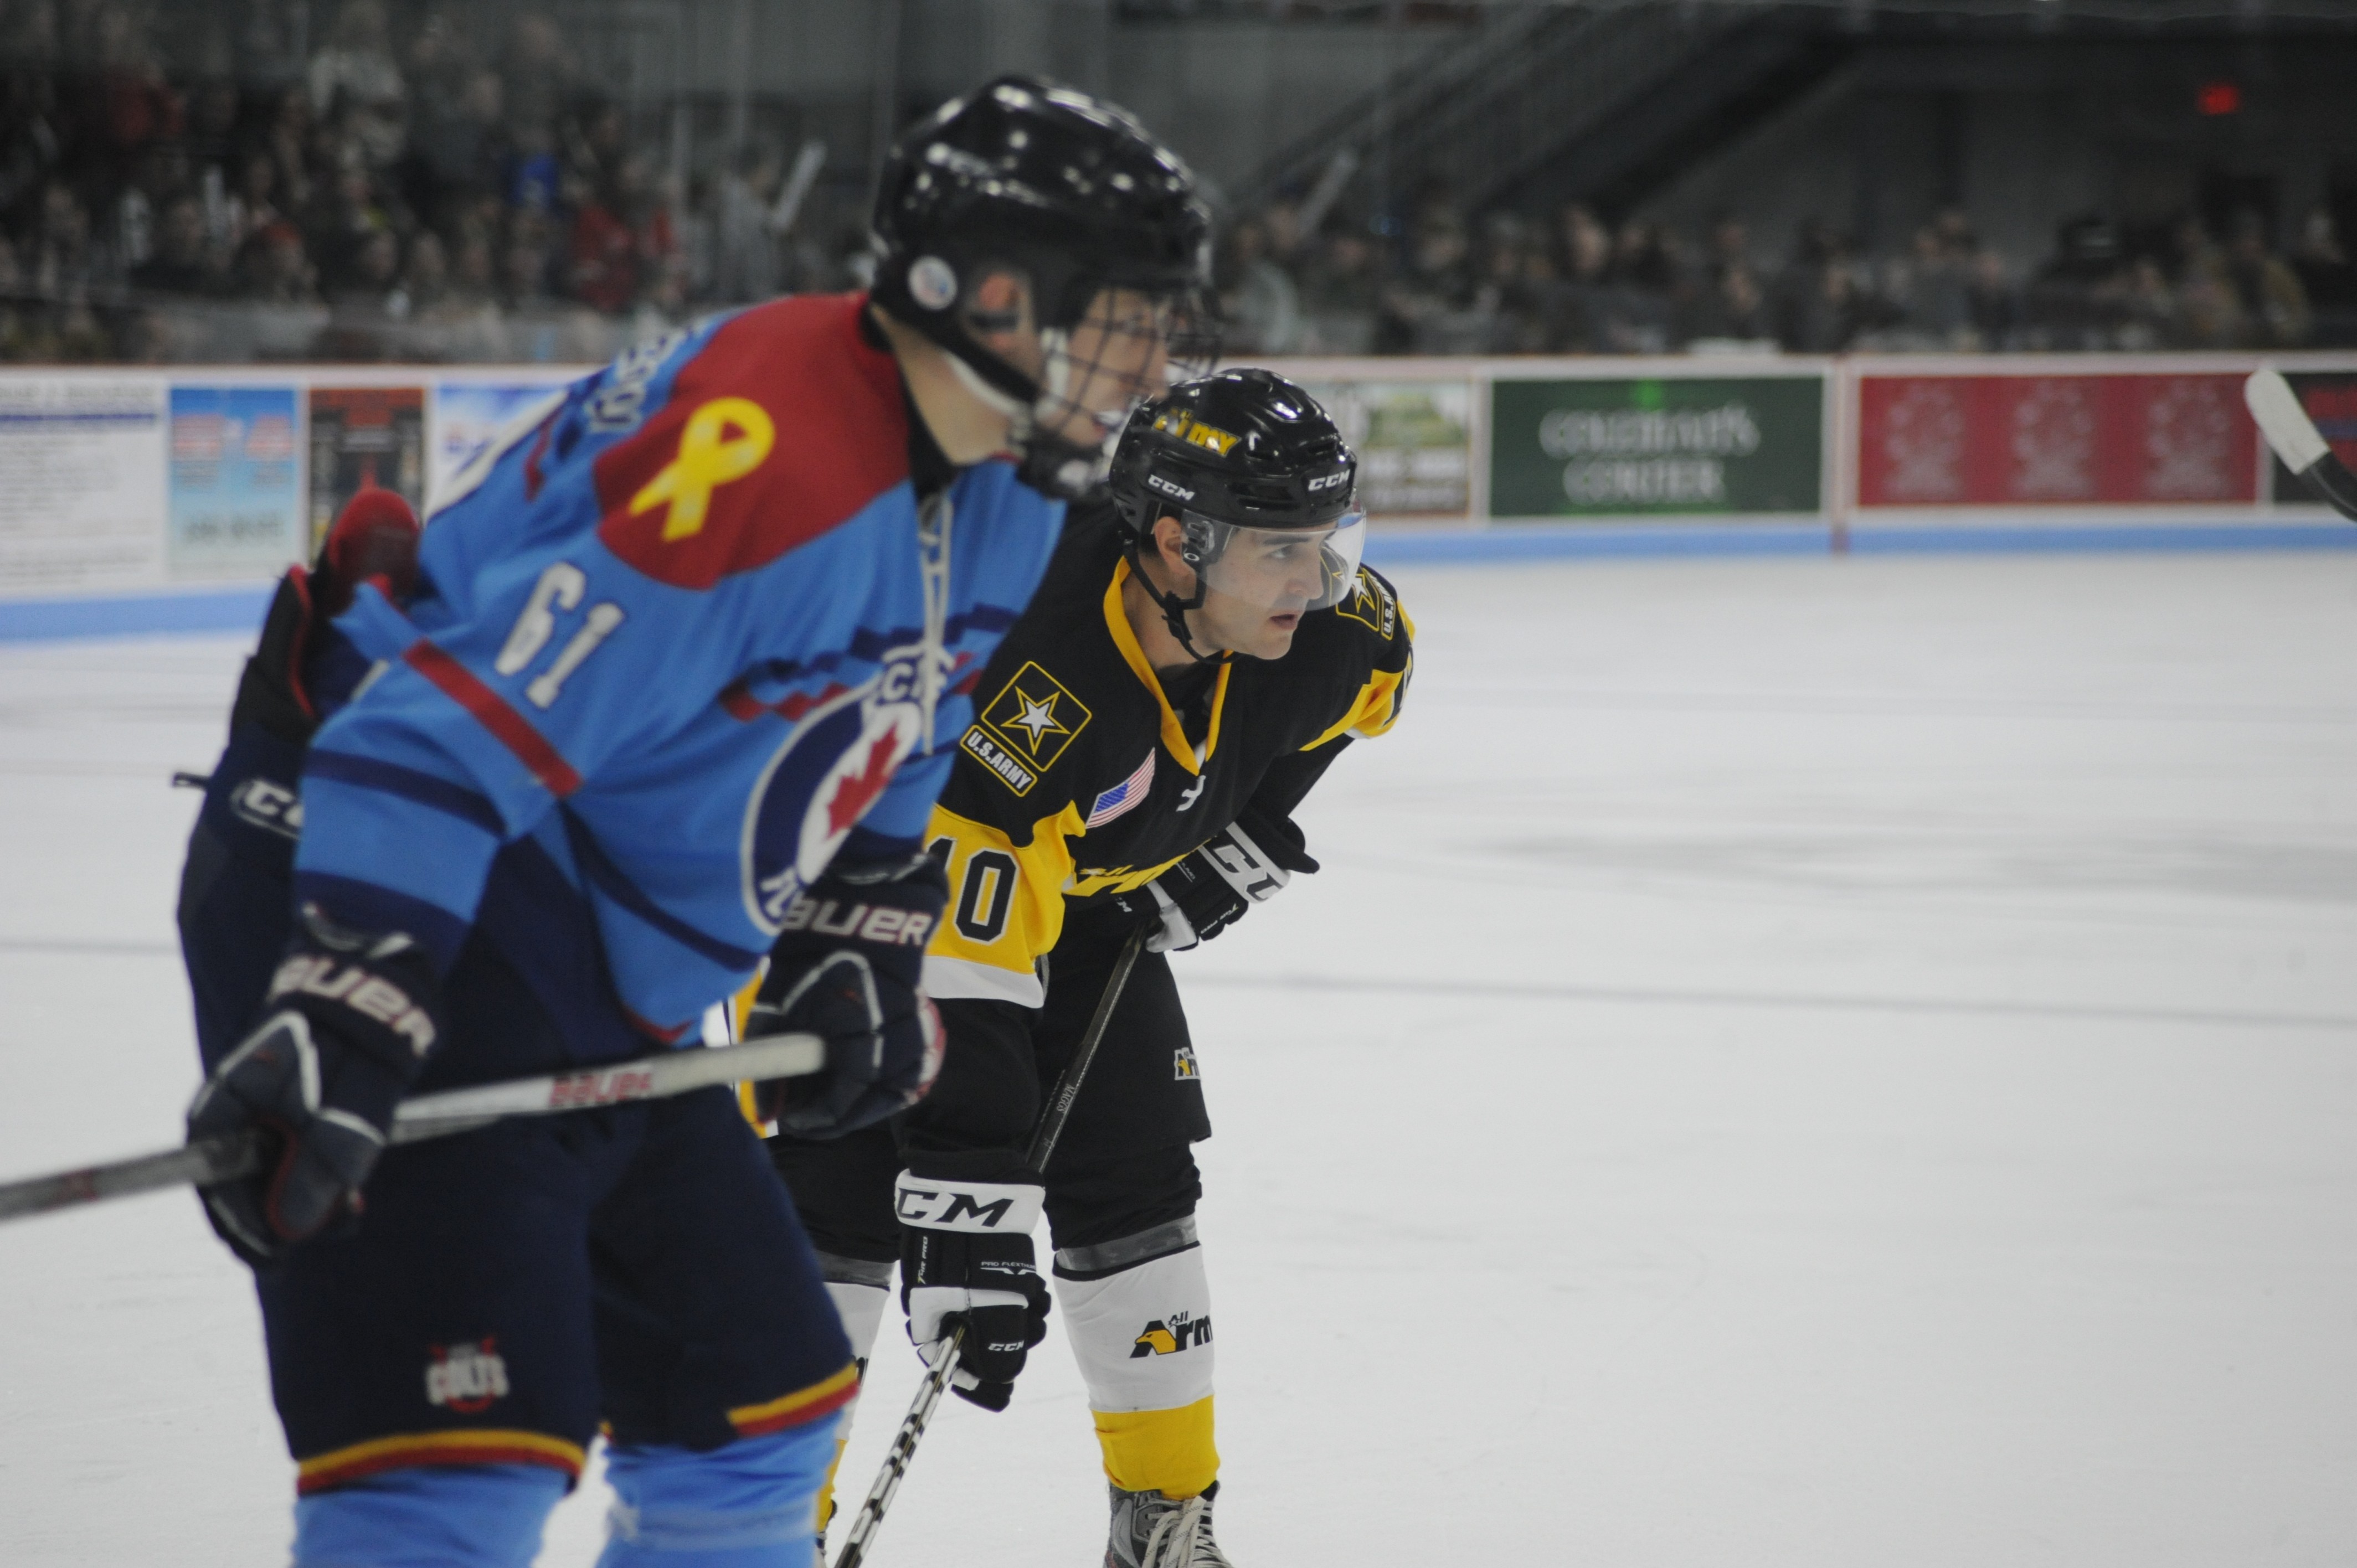 All-Army Ice Hockey Team earns hard-fought 4-2 win over Canadian